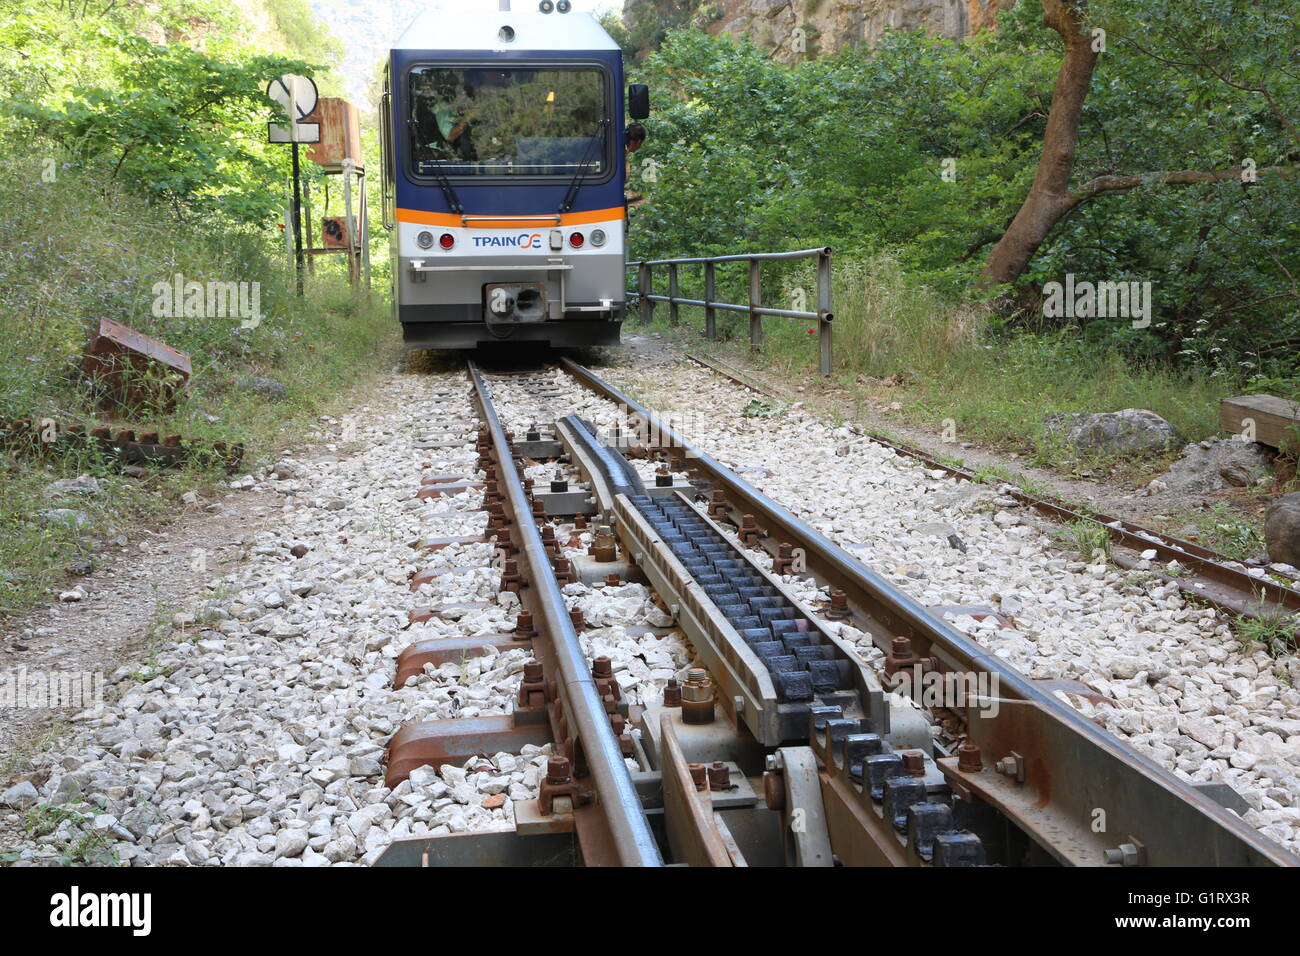 Odontotos Zahnradbahn, Griechenland, Kalavryta Stockfoto